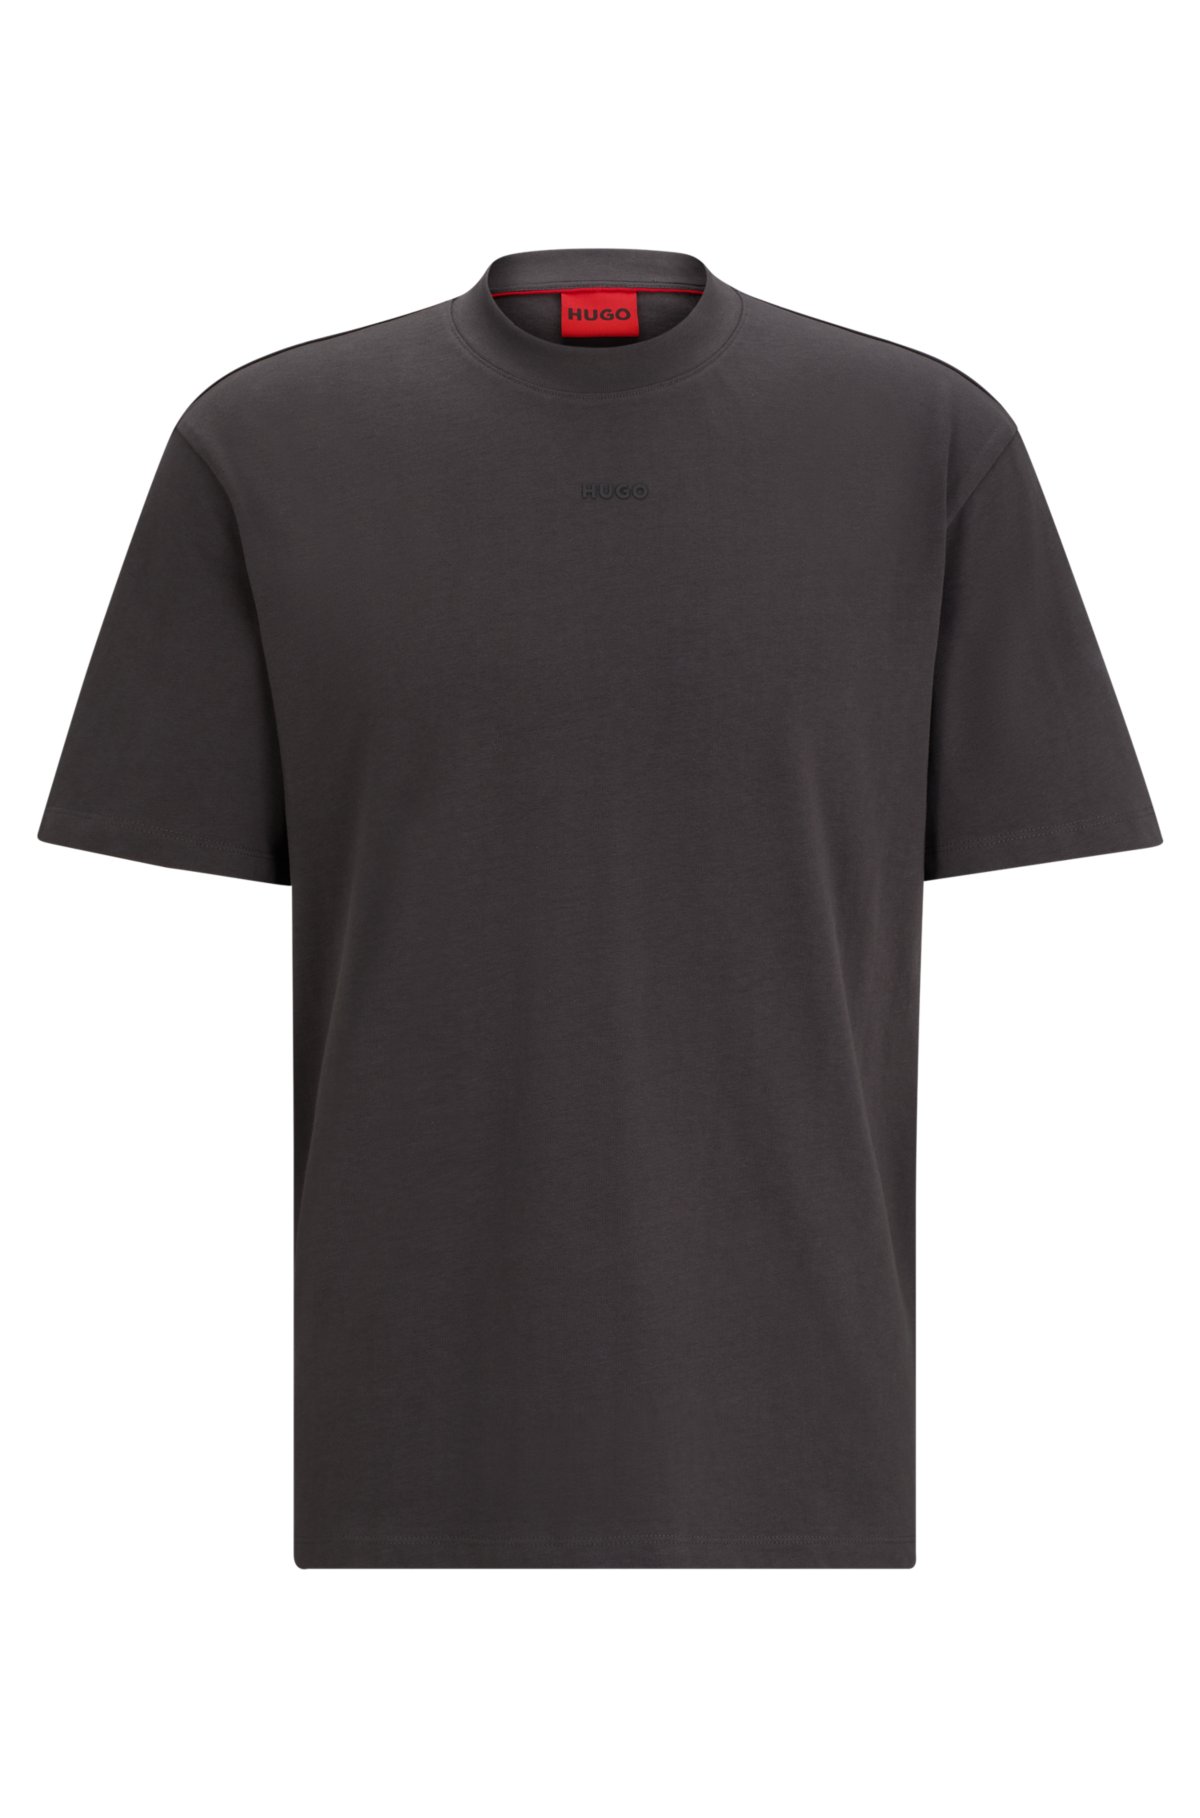 HUGO - Camiseta relaxed fit en punto de algodón con logo estampado